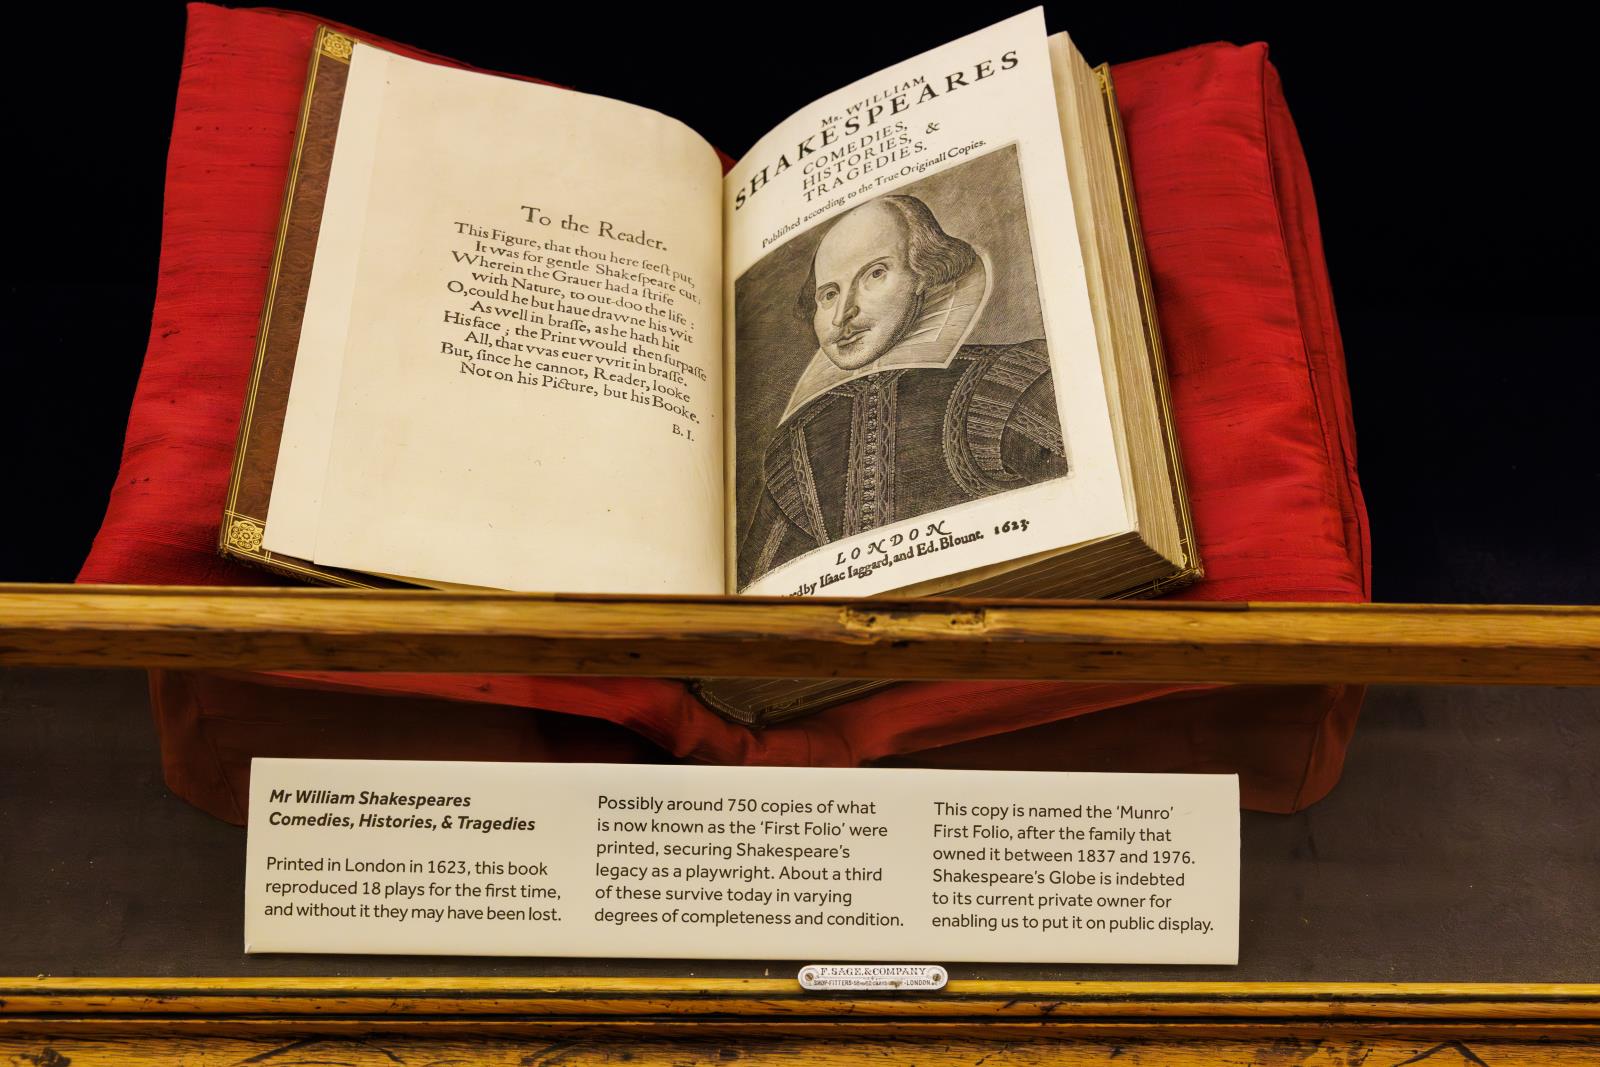 Shakespeare's First Folio 400th Anniversary Dinner - 6 November 2023